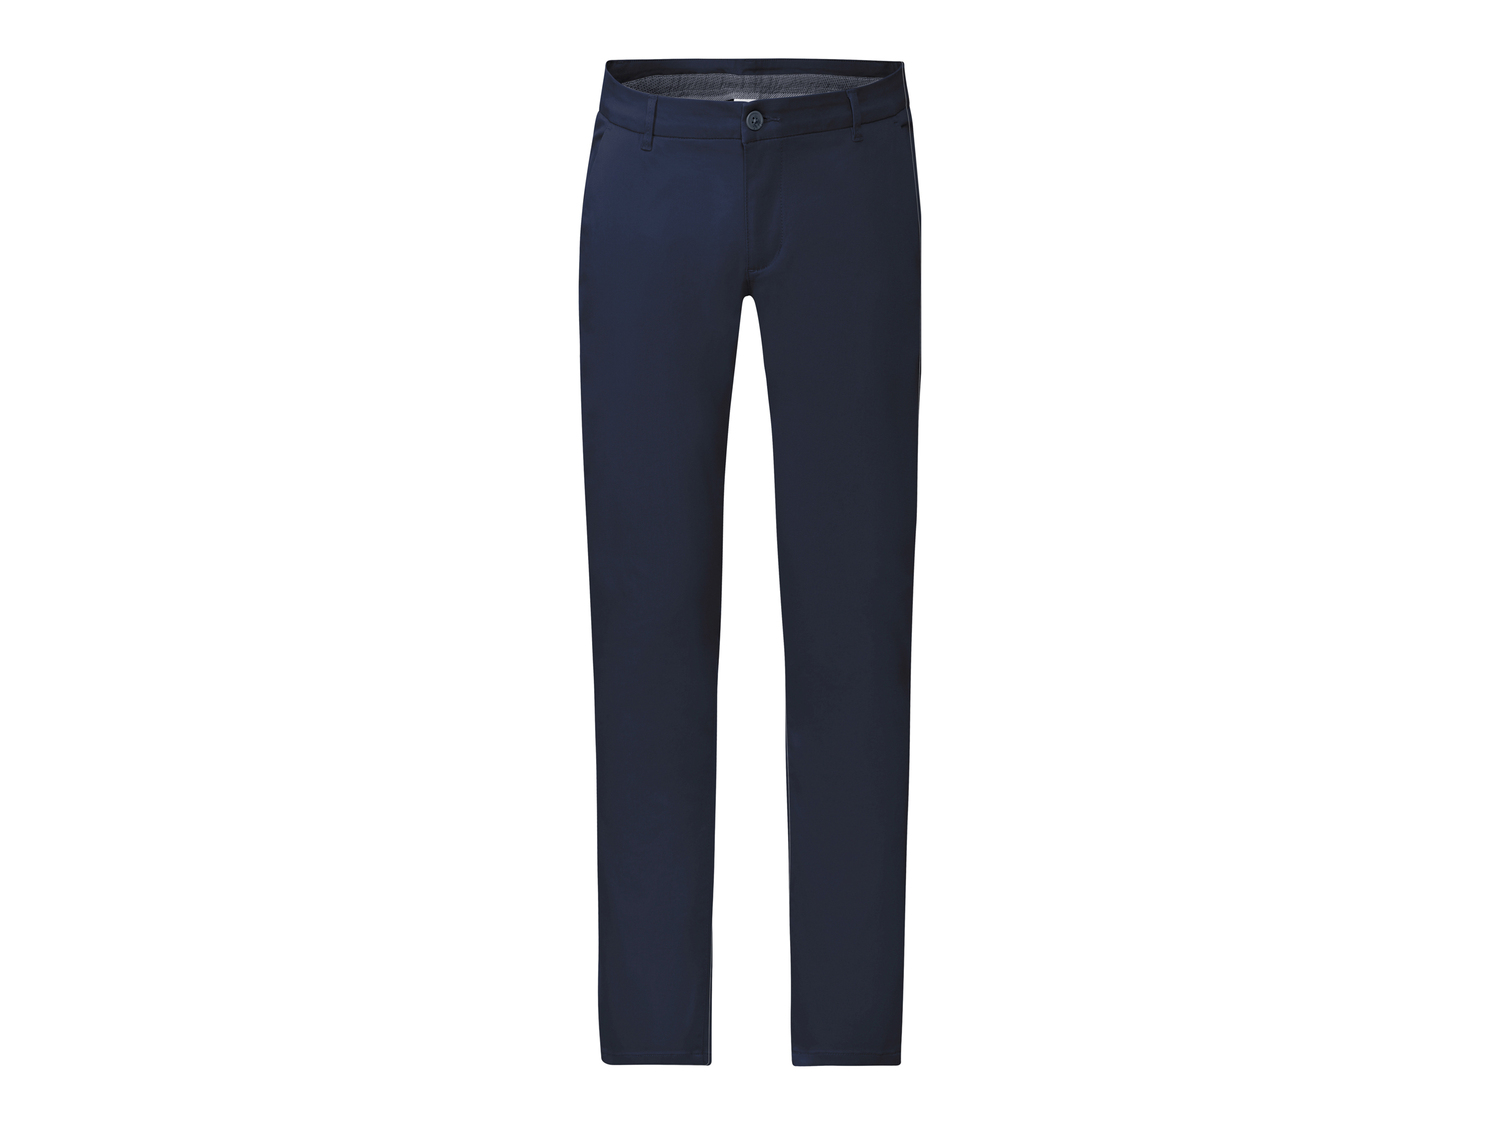 Pantaloni Slim Fit da uomo Livergy, prezzo 9.99 &#8364; 
Misure: 46-56
Taglie ...